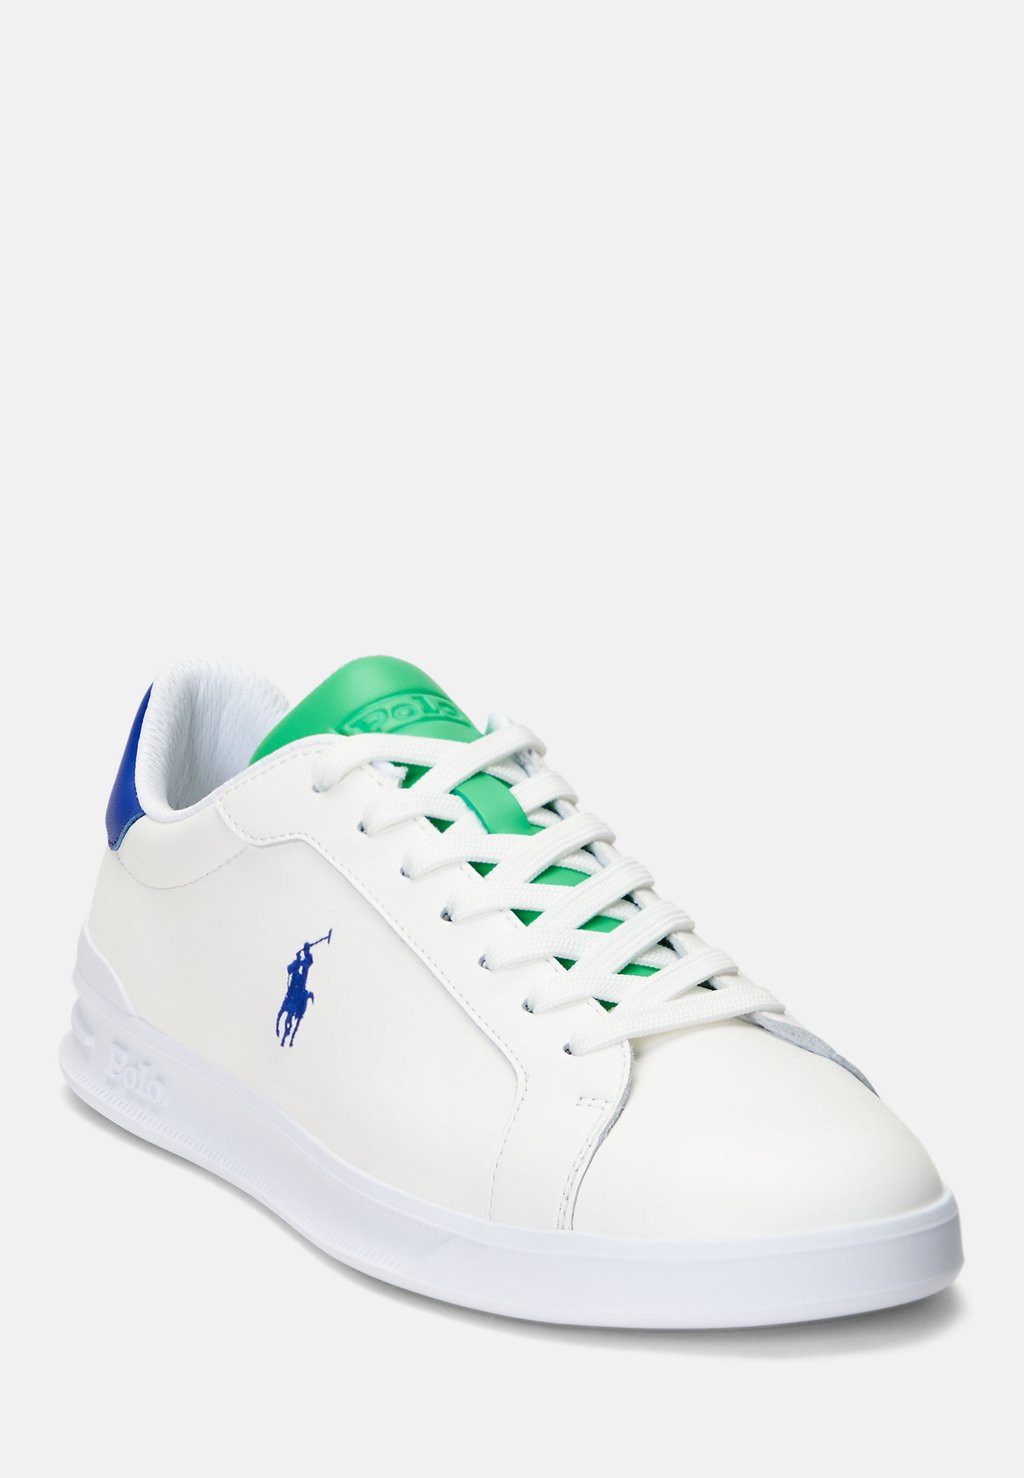 Кроссовки низкие HERITAGE COURT TOP Polo Ralph Lauren, цвет white/green/royal